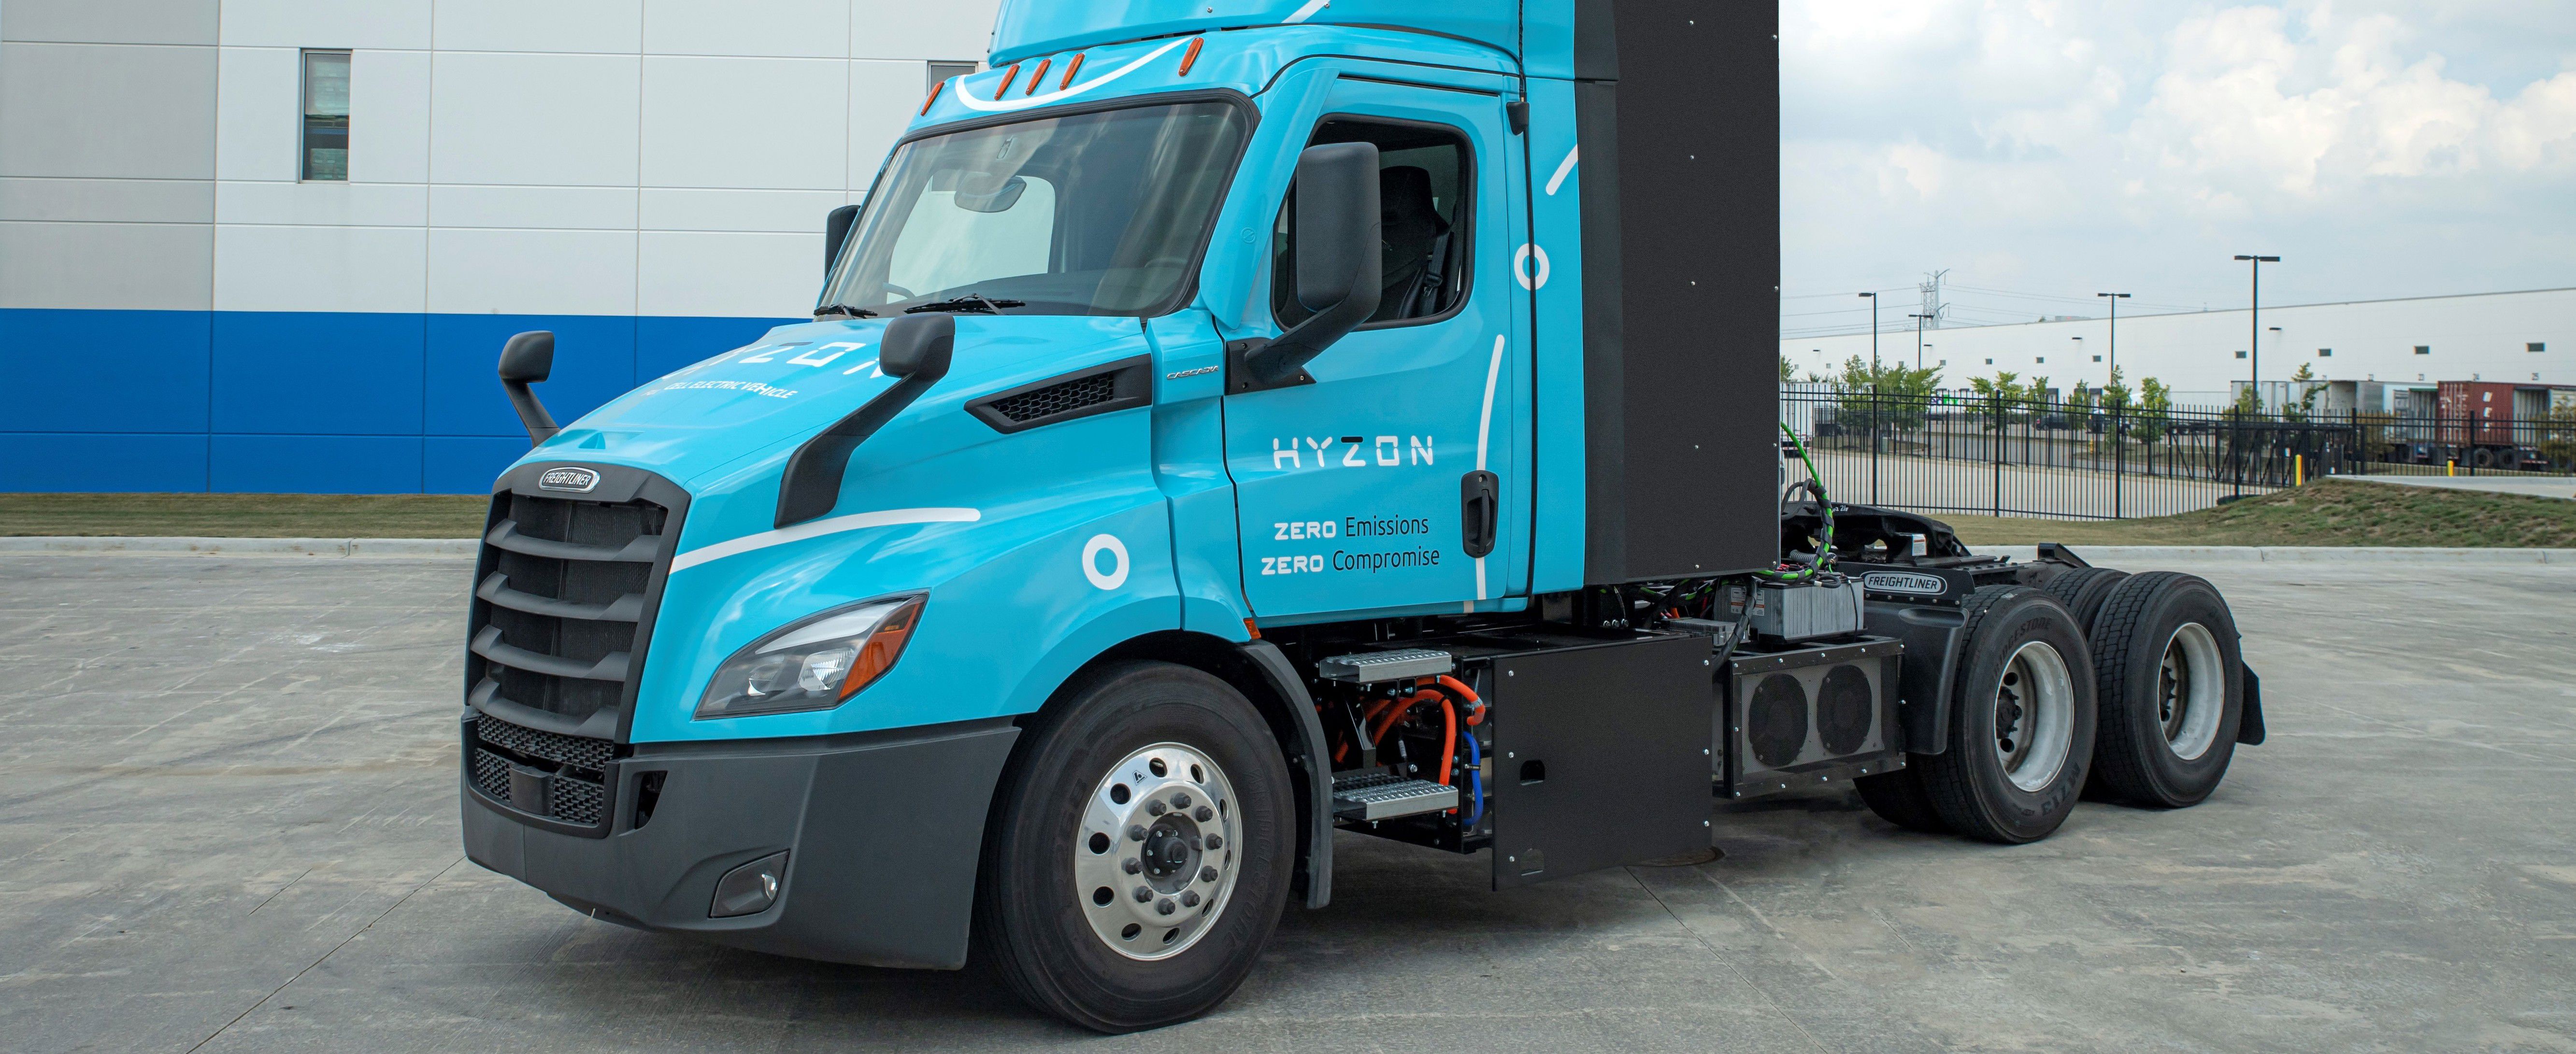 Landmark hydrogen hub  and trucks support Ark Energy  green zinc ambitions